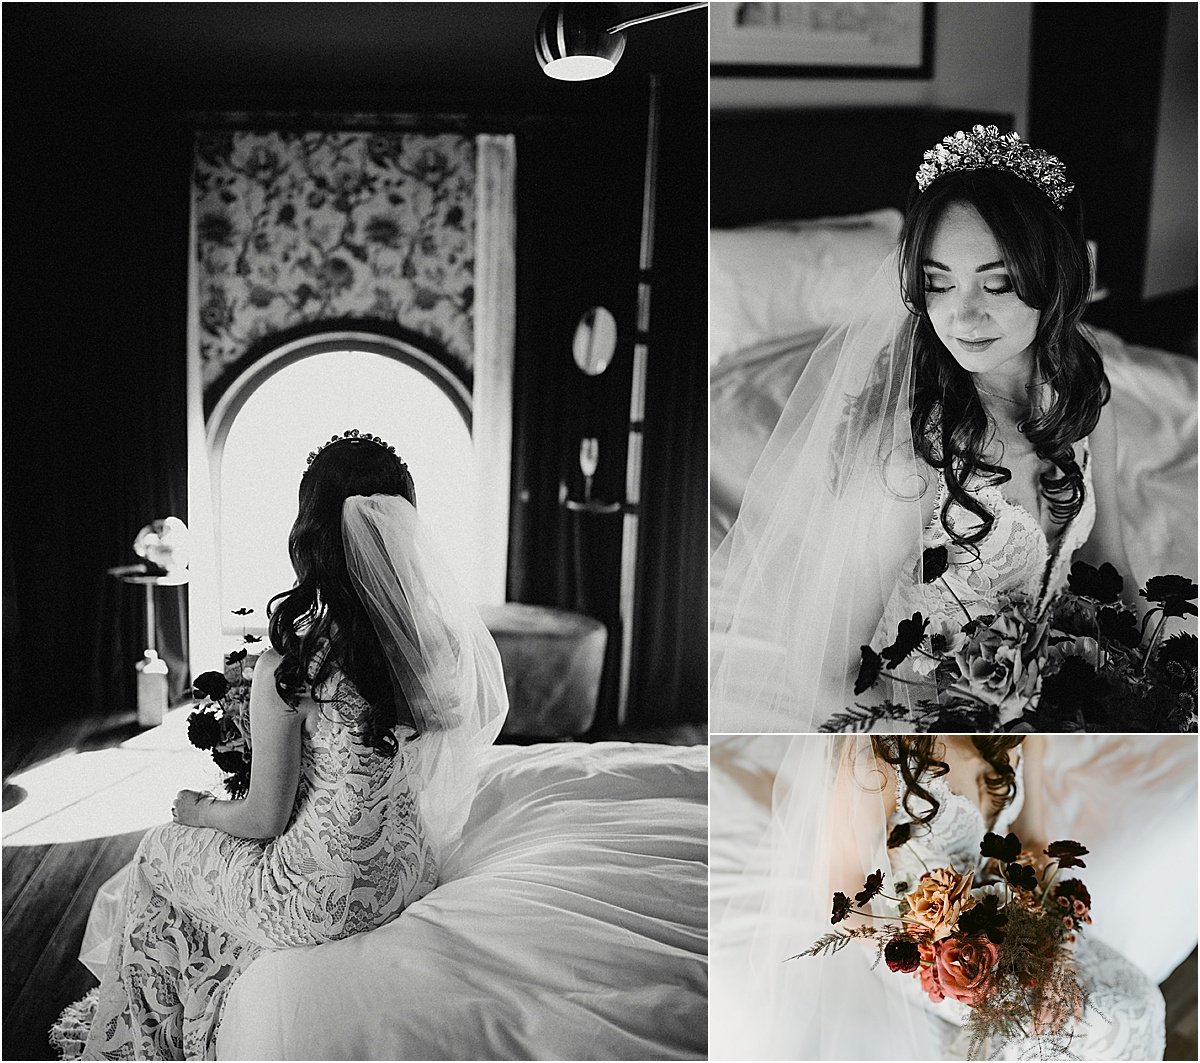 Broadview-Hotel-Wedding-Planner-Toronto-Laura-Olsen-Events-Northern-Wildflower-Photography4.jpg